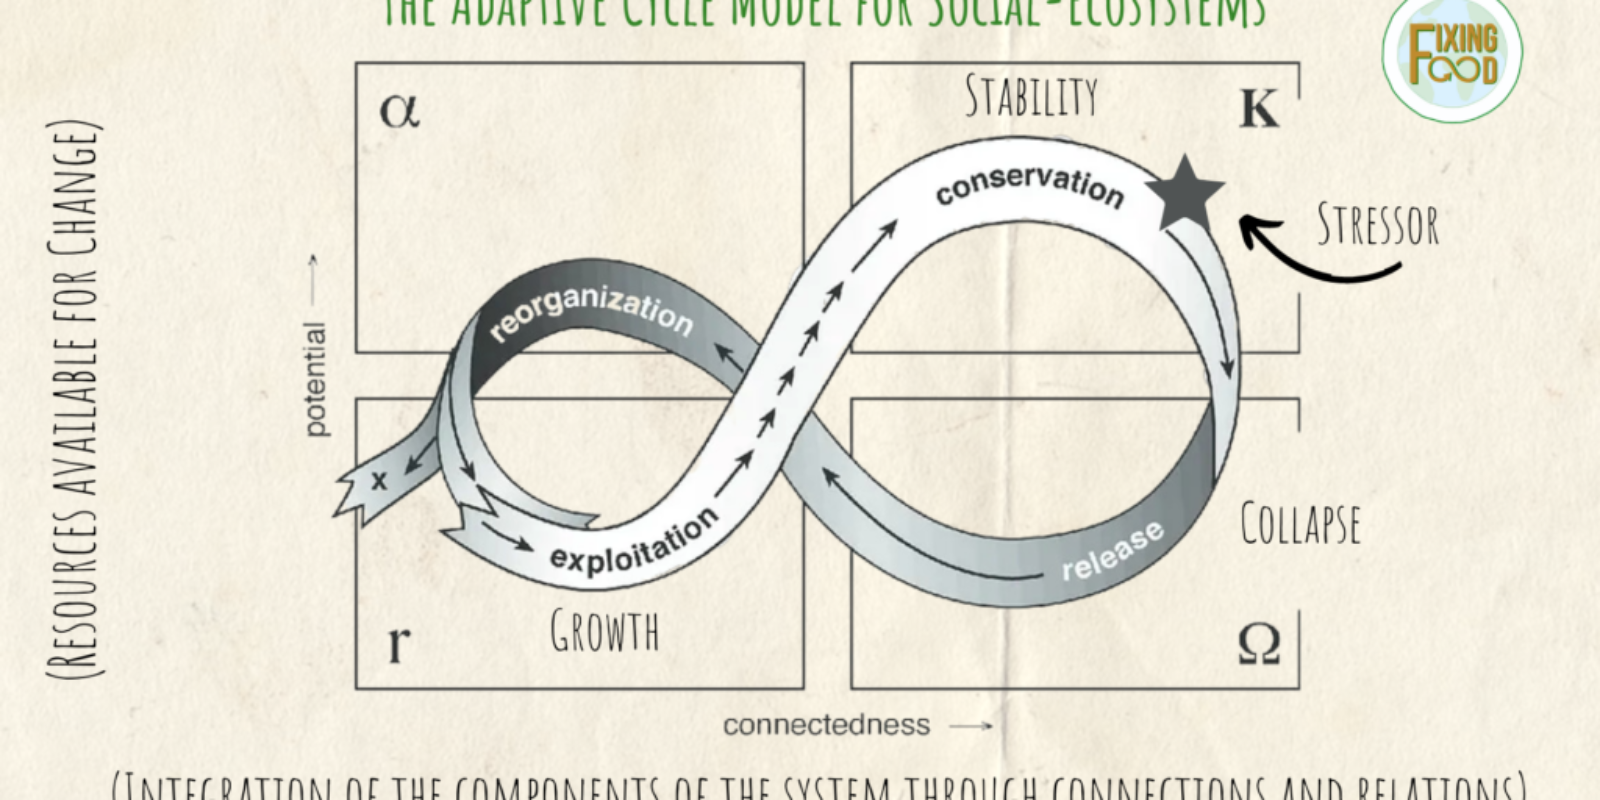 Adaptive cycle model